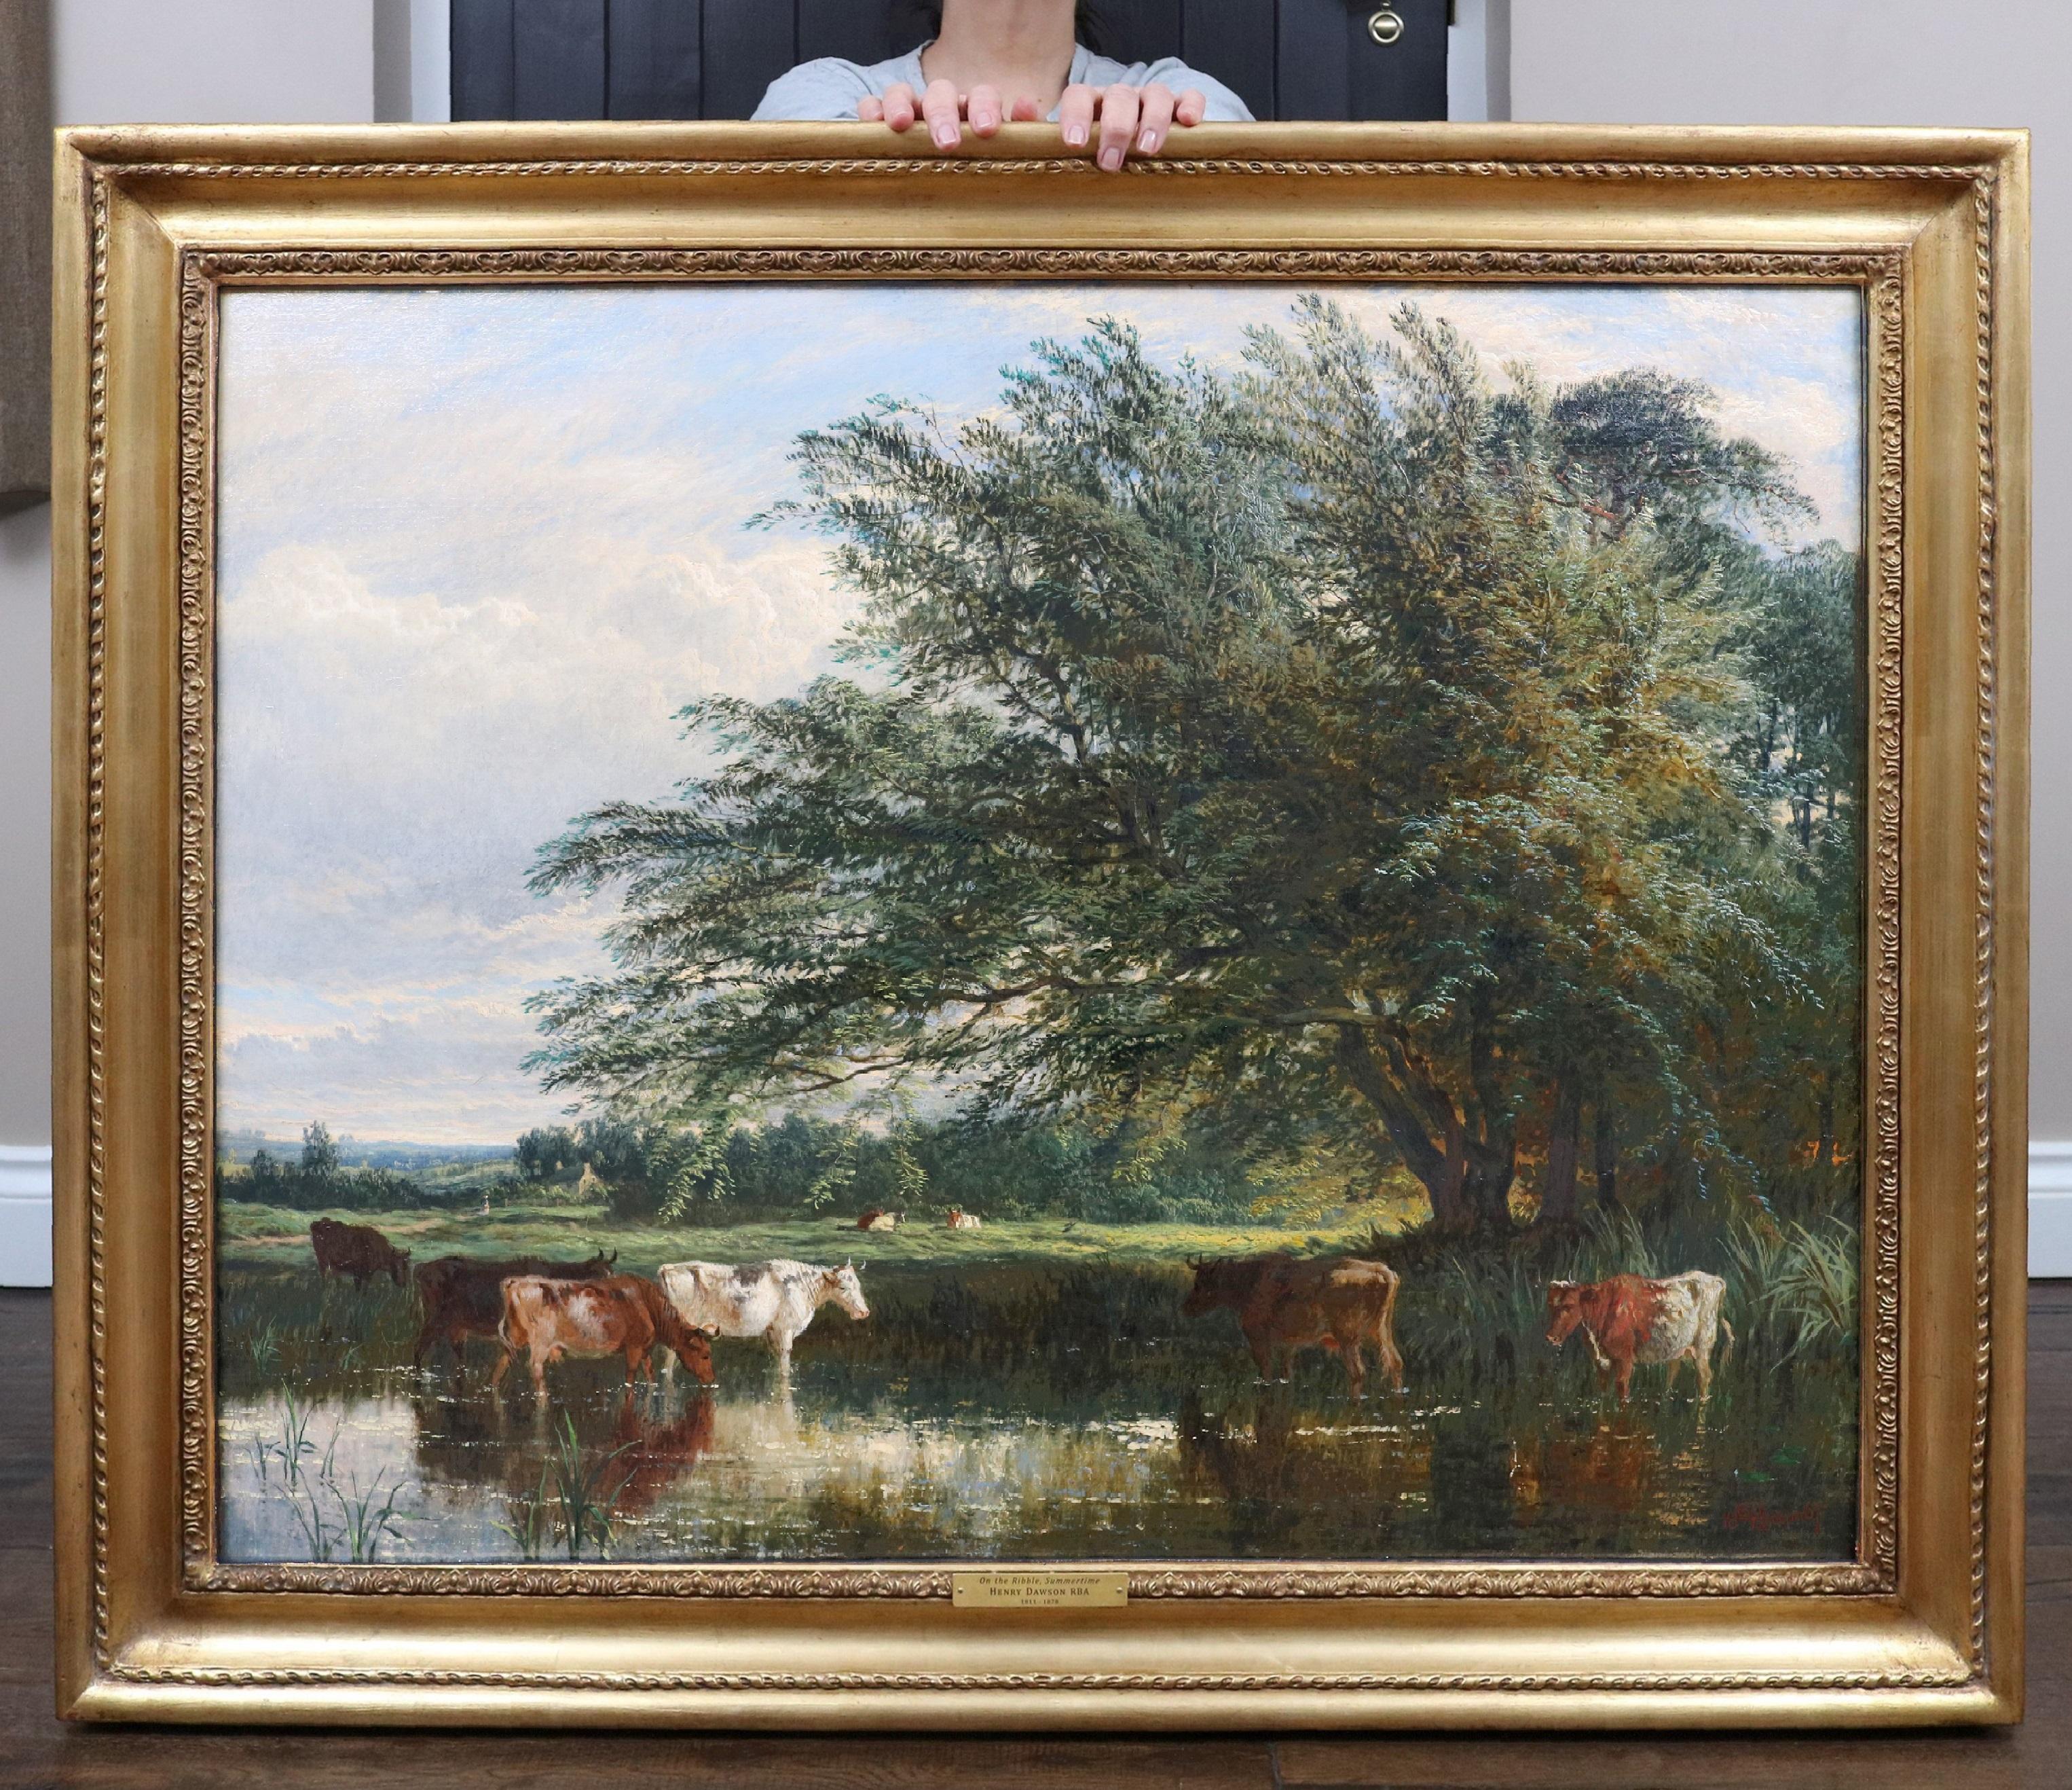 Animal Painting Henry Dawson - On the Ribble, Summertime - Grande peinture à l'huile anglaise du 19ème siècle